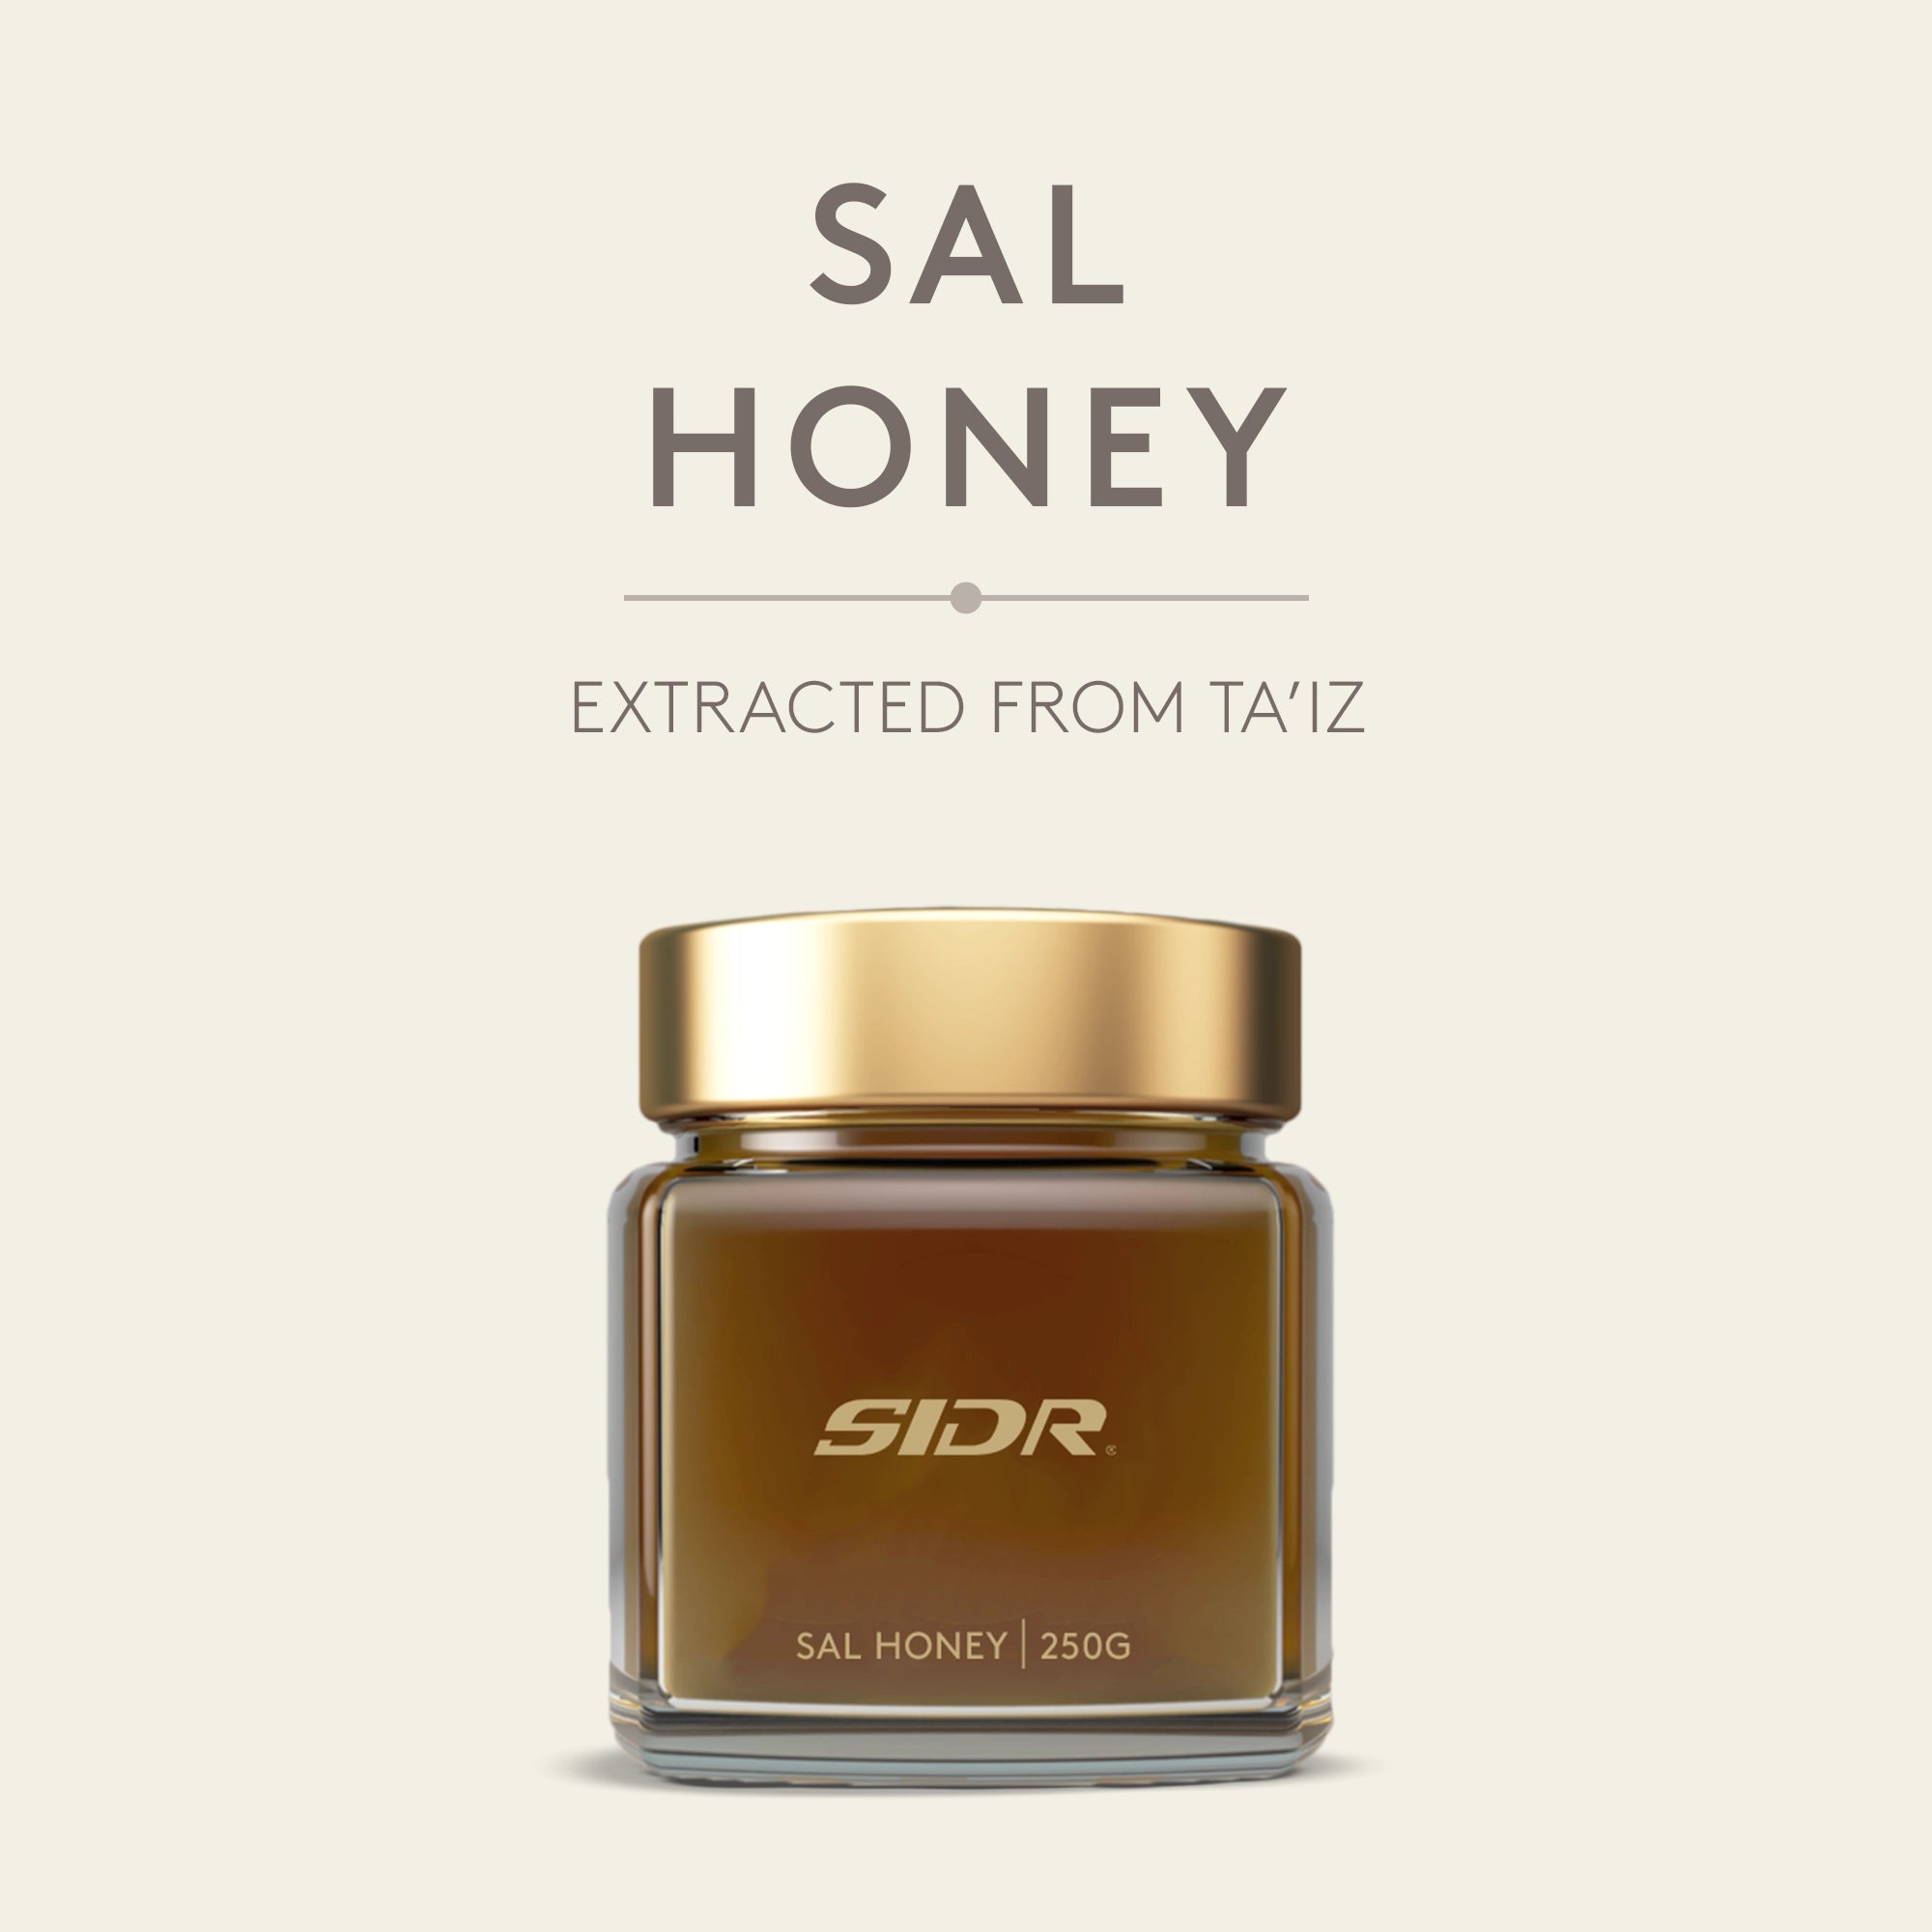 sal honey from taiz